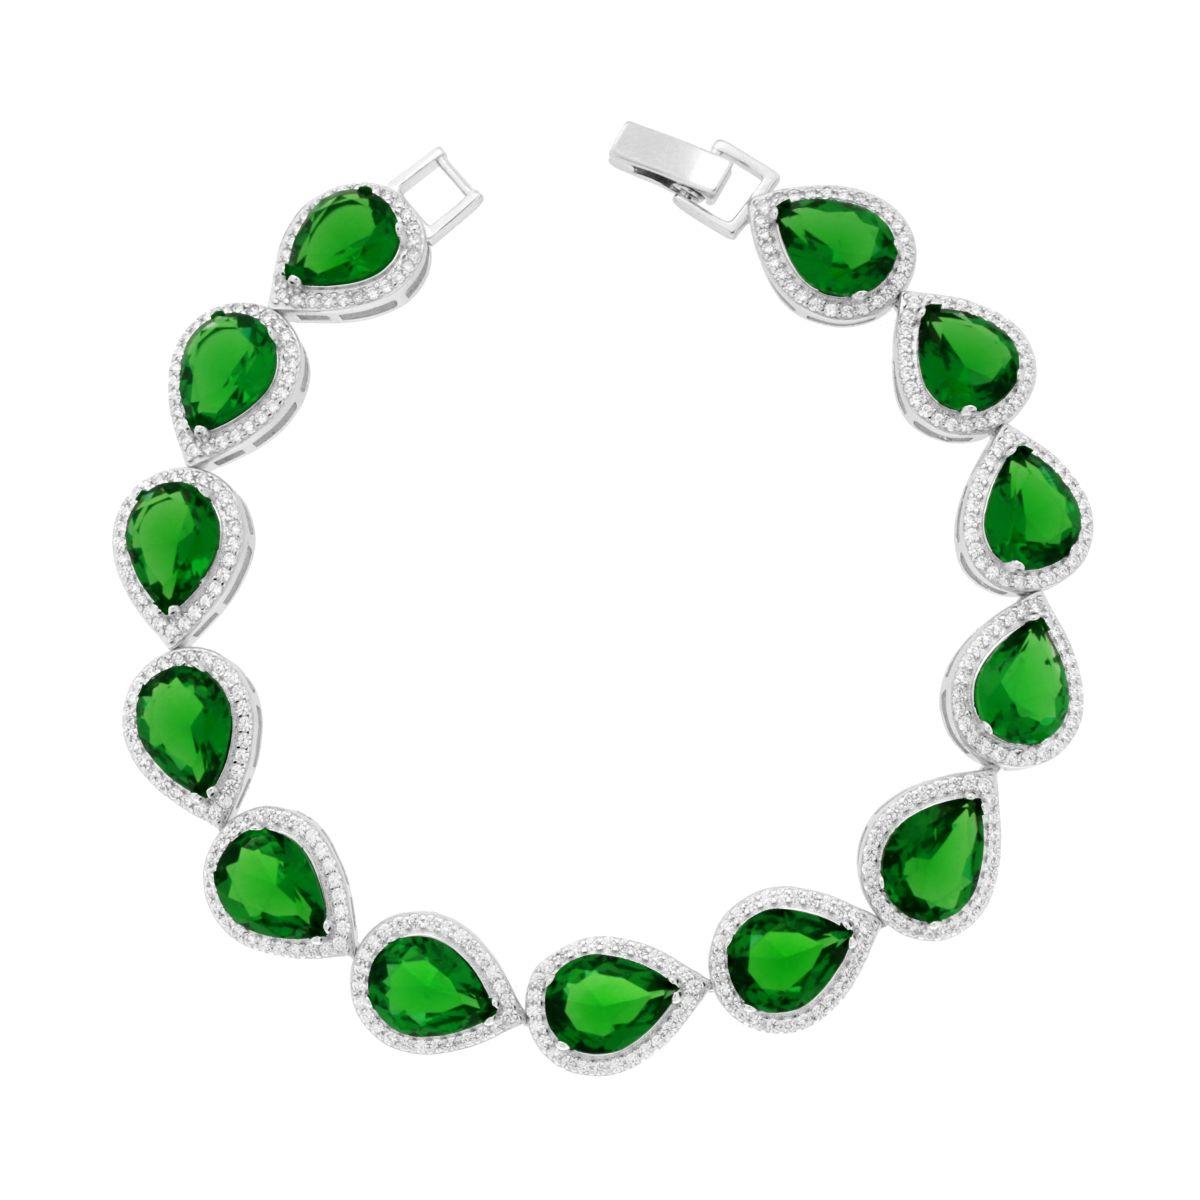 Bracciale Tennis Griffe cm 18 Goccia Verde Smeraldo contornati da Cubic Zirconia Bianchi in ARGENTO 925 Galvanica Rodio